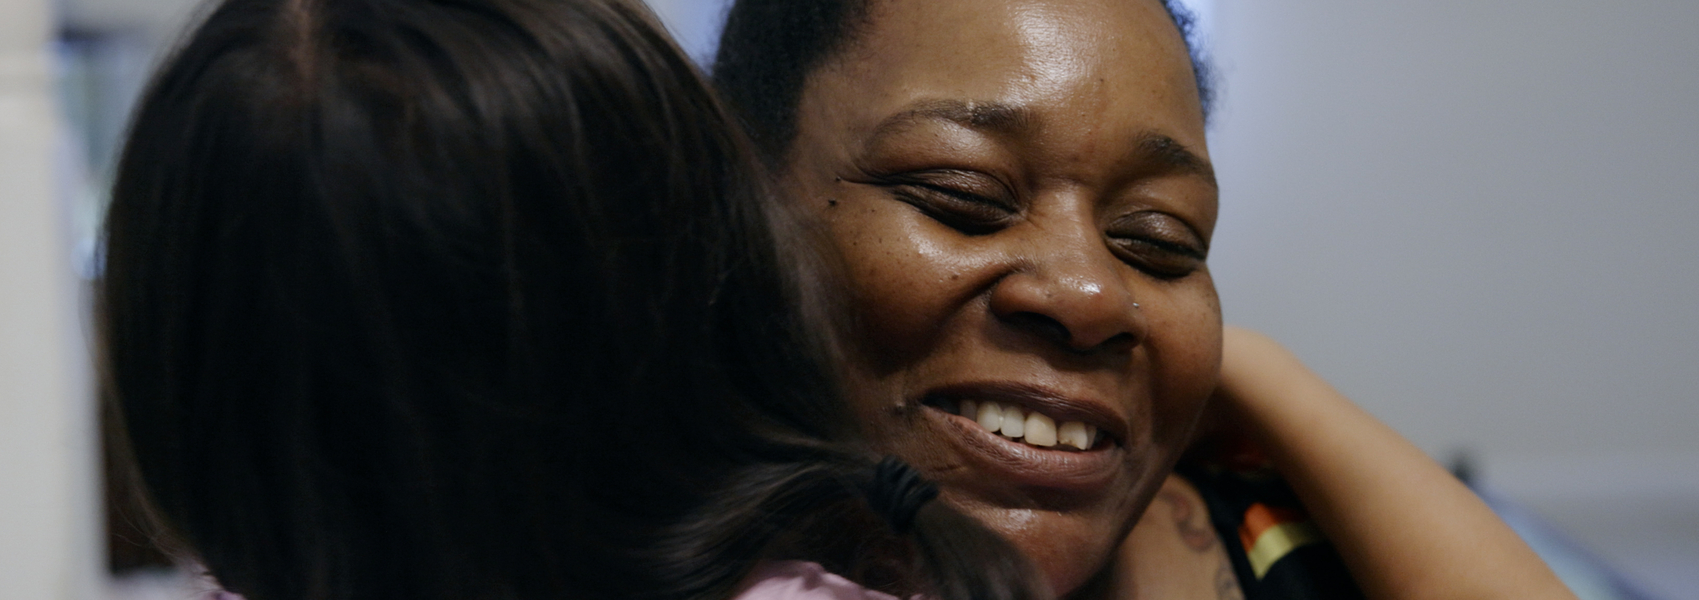 Black foster mother hugs a refugee teenager